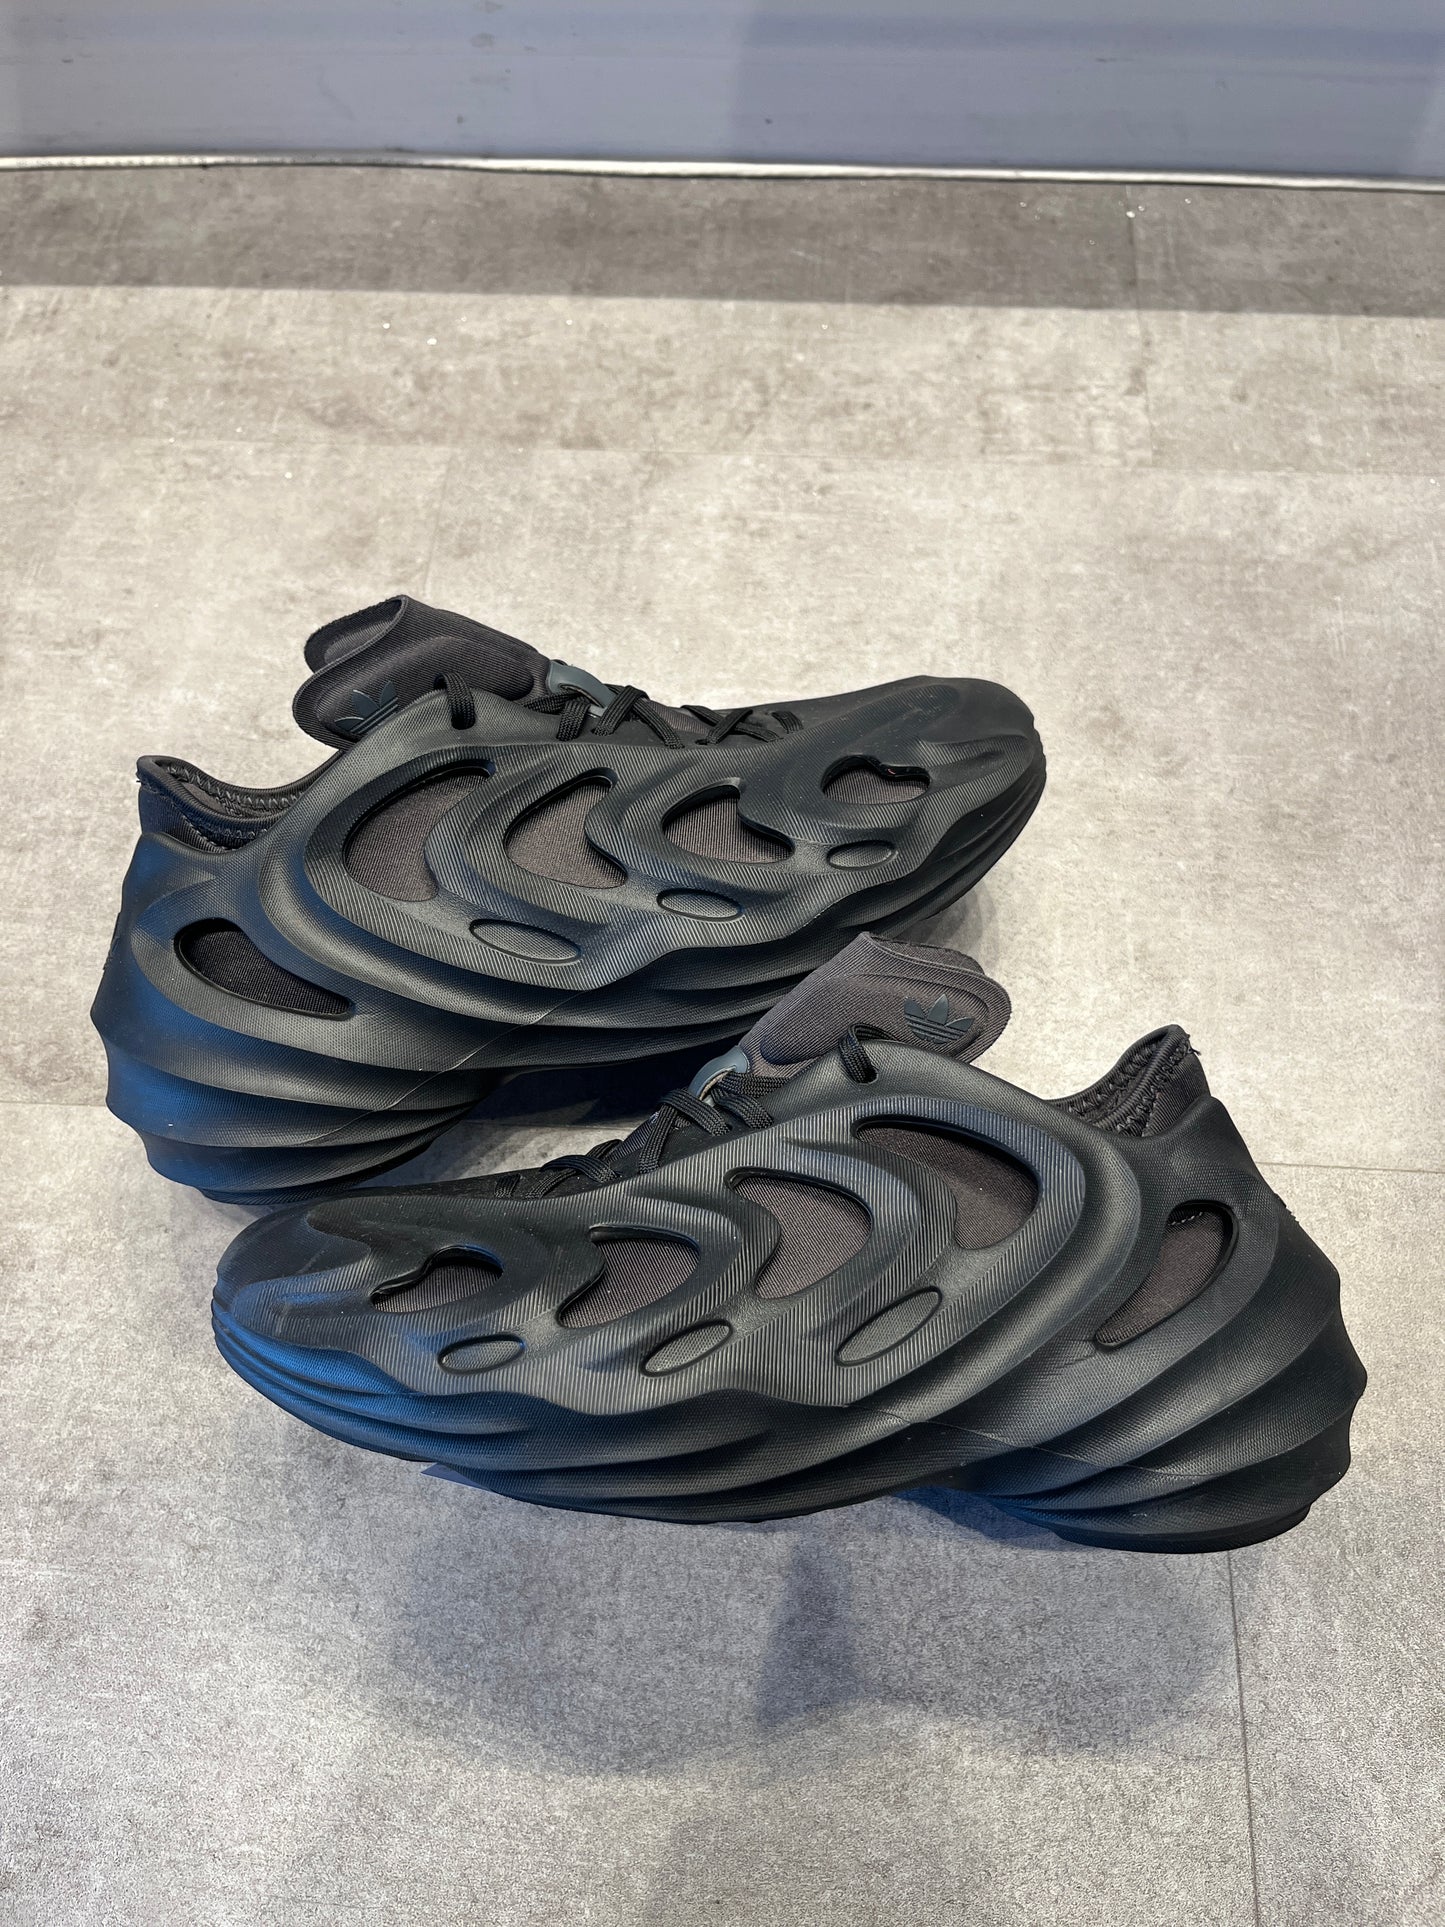 Adidas Adifom Q Carbon (Preowned Size 7)